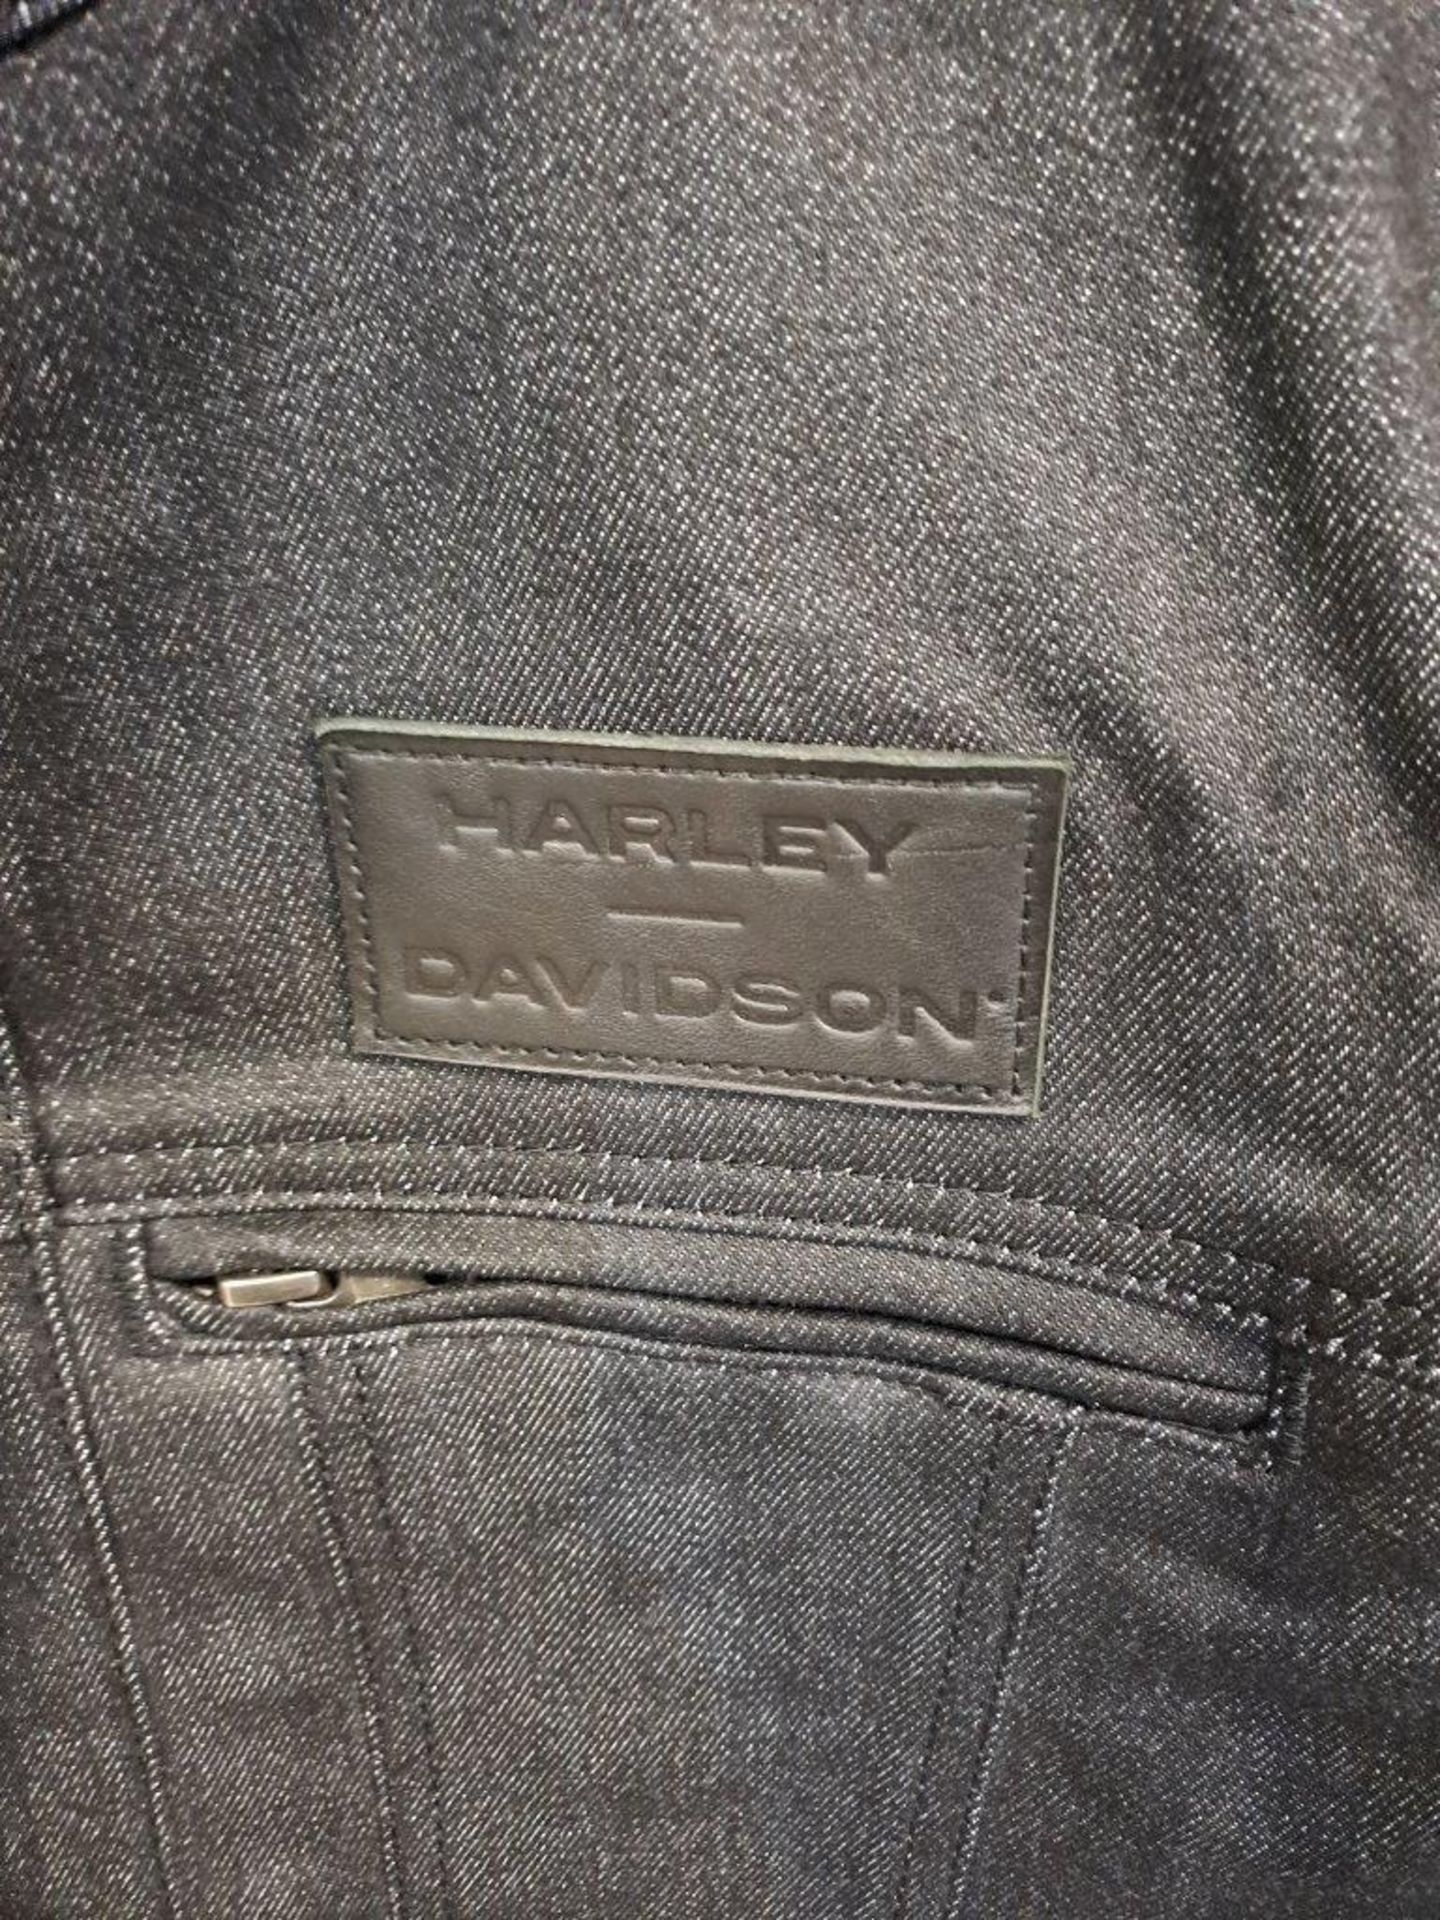 Harley Davidson Chisel Denim Trucker Medium Mens Jacket - Image 4 of 8